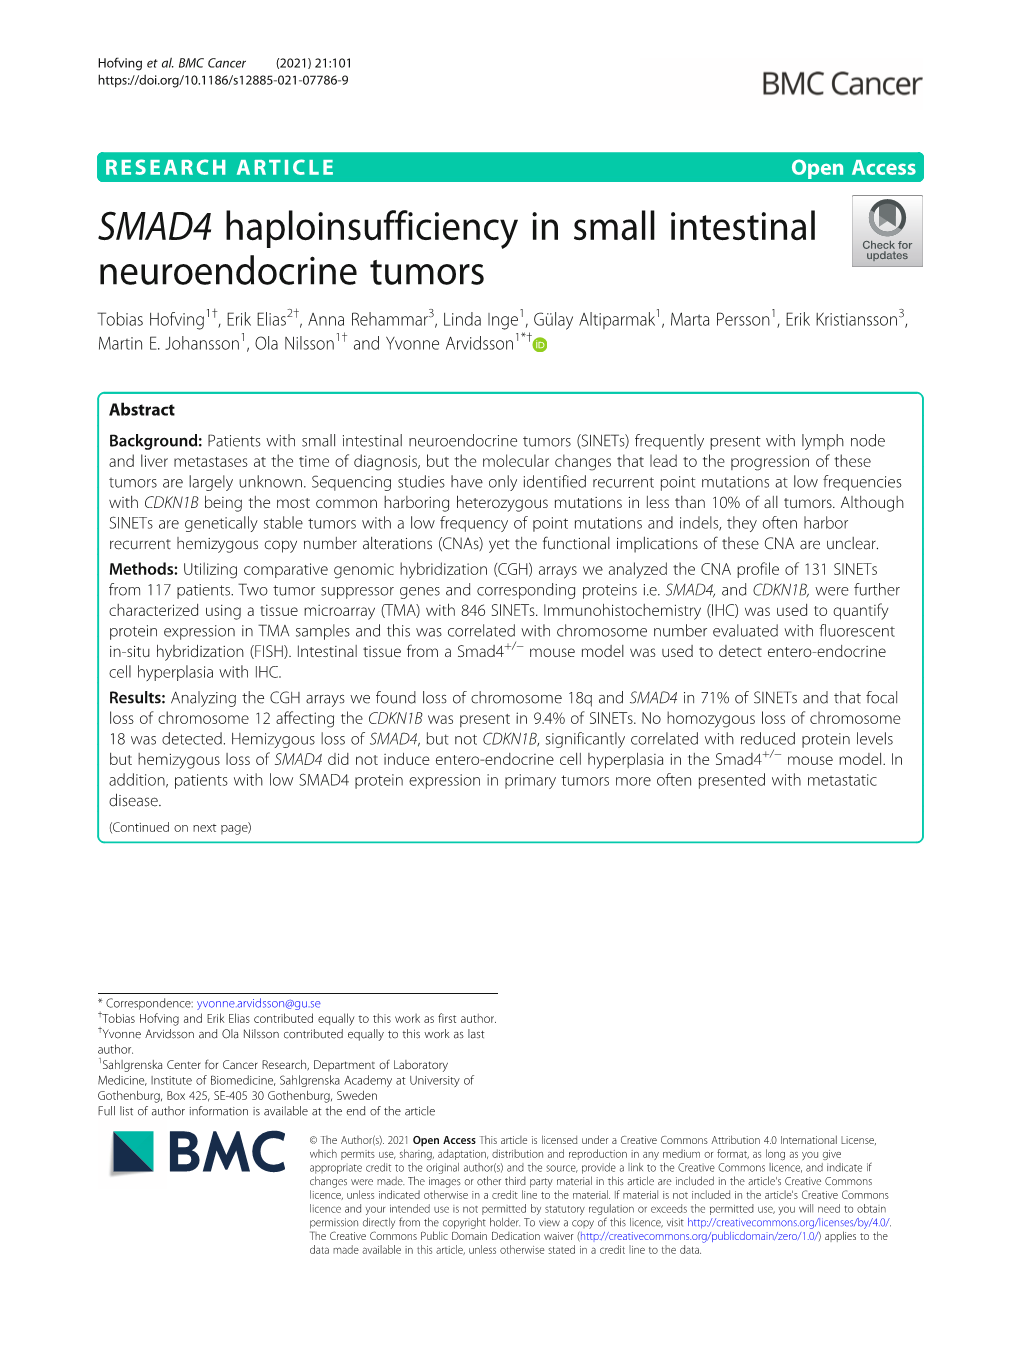 SMAD4 Haploinsufficiency in Small Intestinal Neuroendocrine Tumors